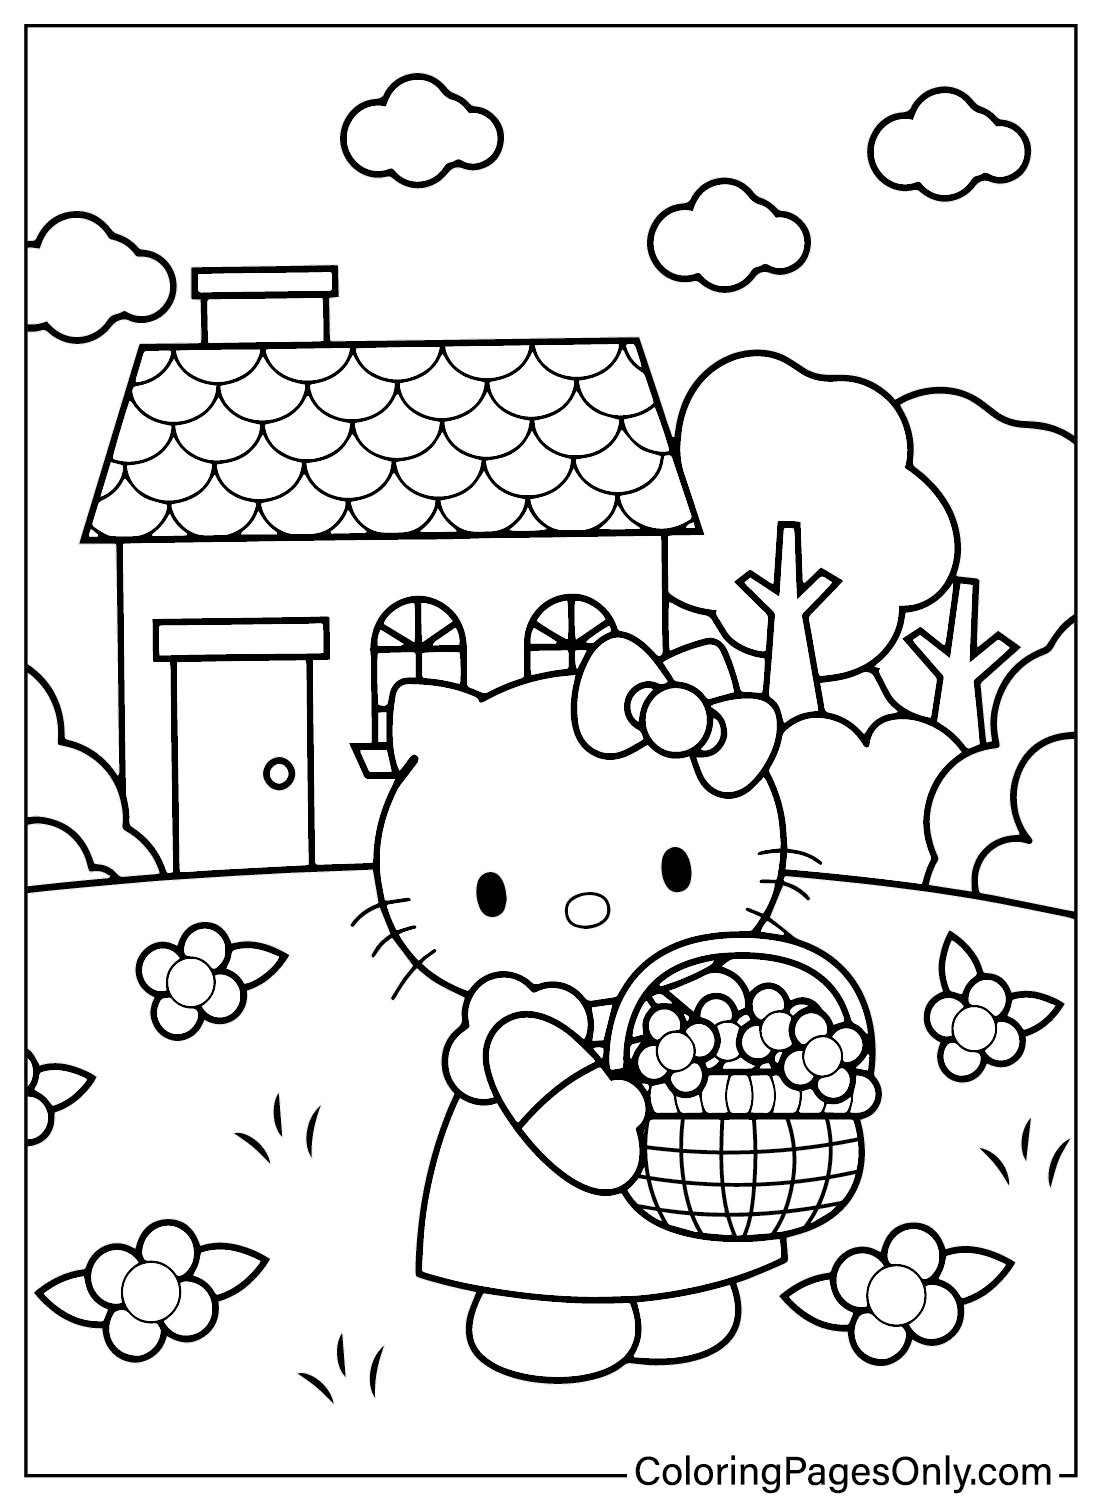 Página colorida da Hello Kitty da Hello Kitty